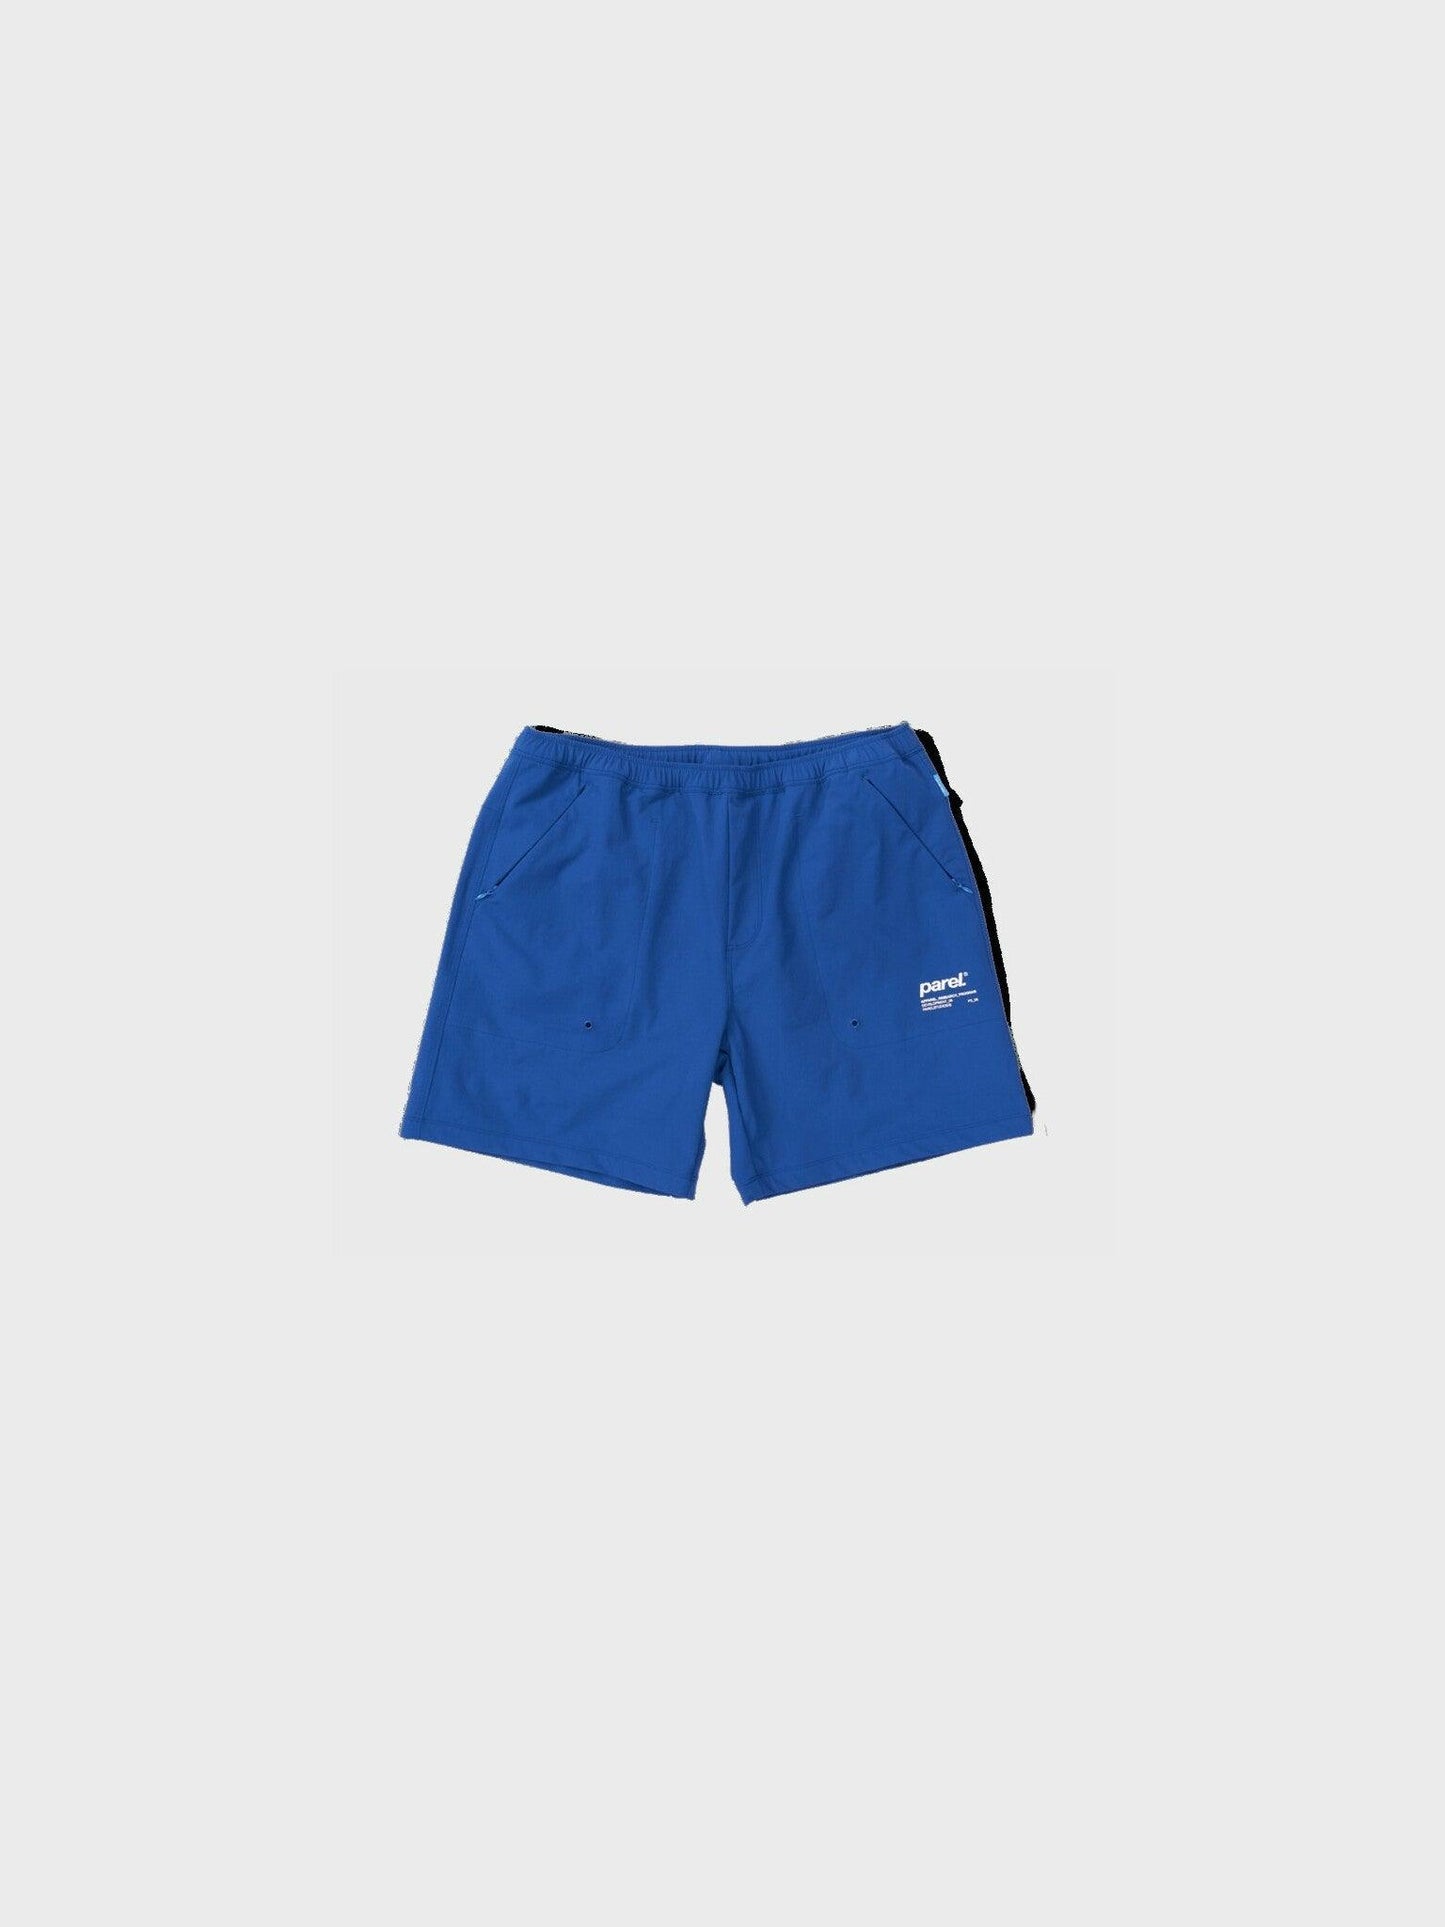 Parel Saana Shorts - Cobalt Blue